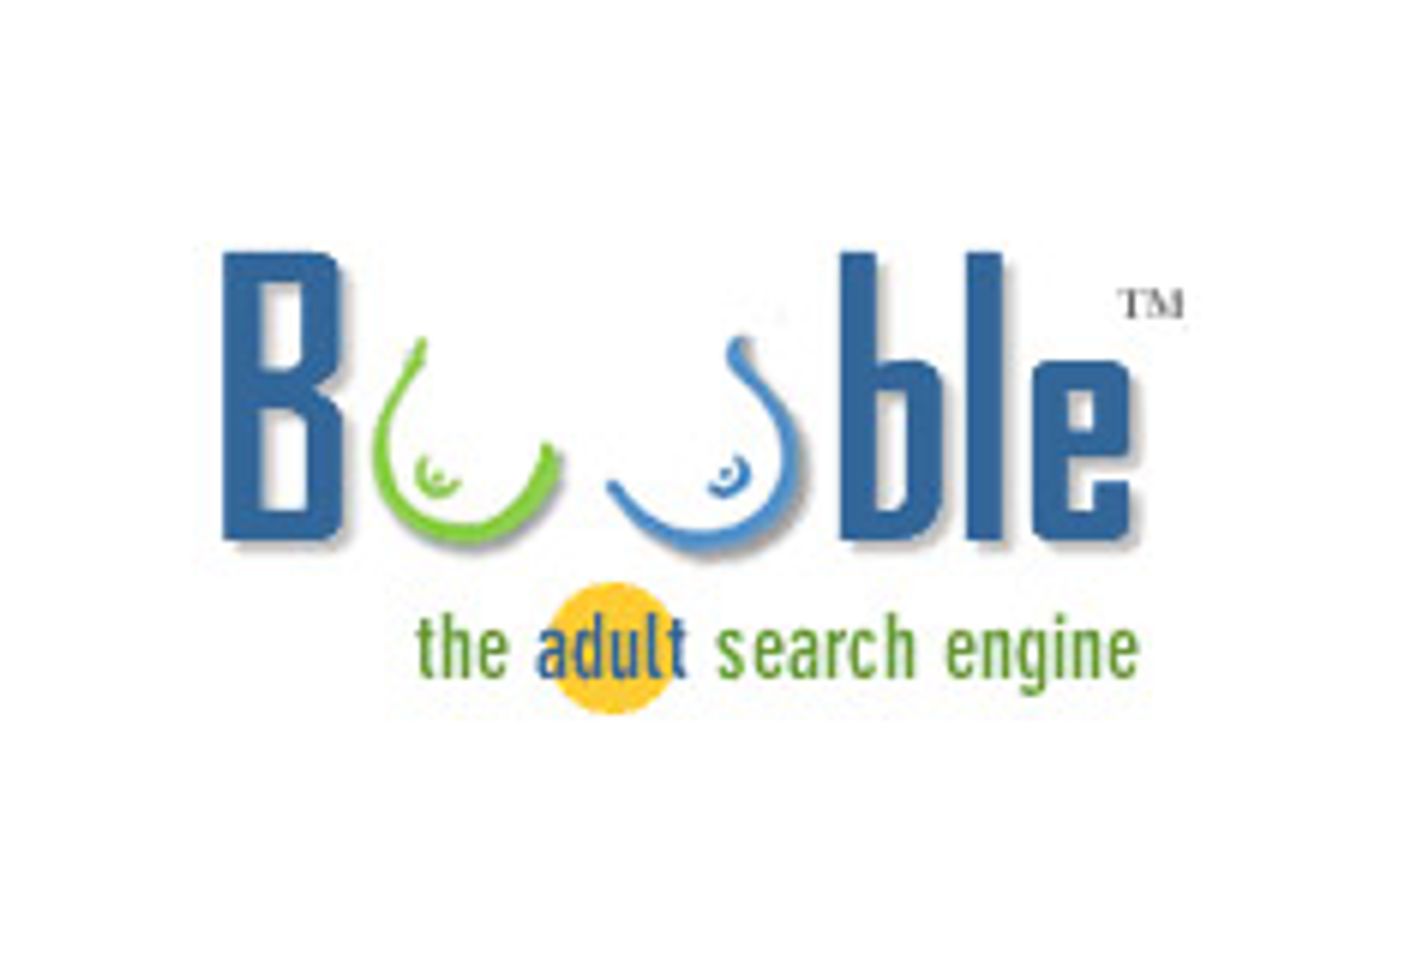 Adam & Eve, Booble Sponsor Breast Cancer Fundraising at AEE